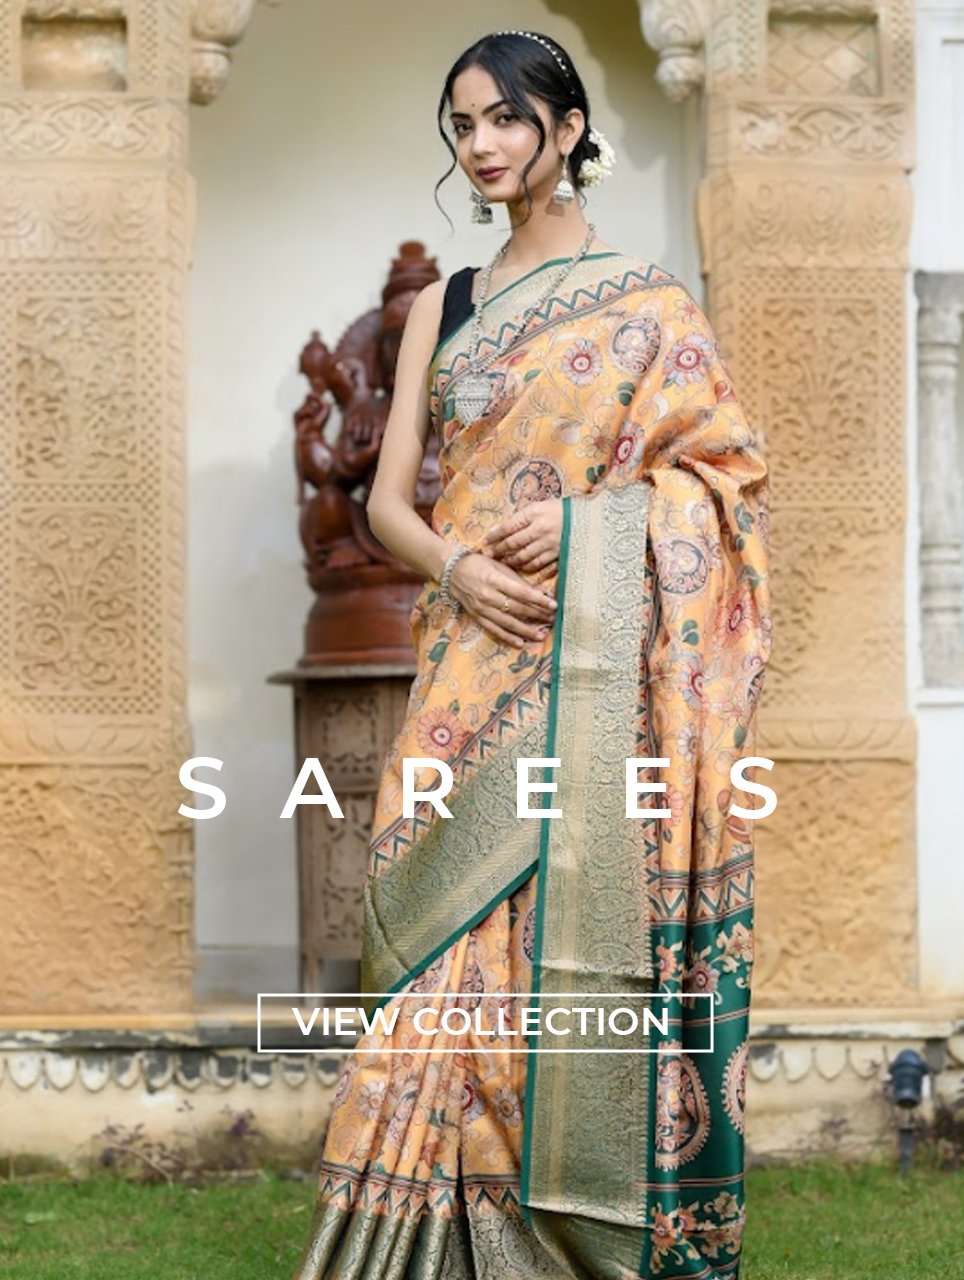 Shriya Saran Looks Elegant In Grey And Gold Saree. See Pics